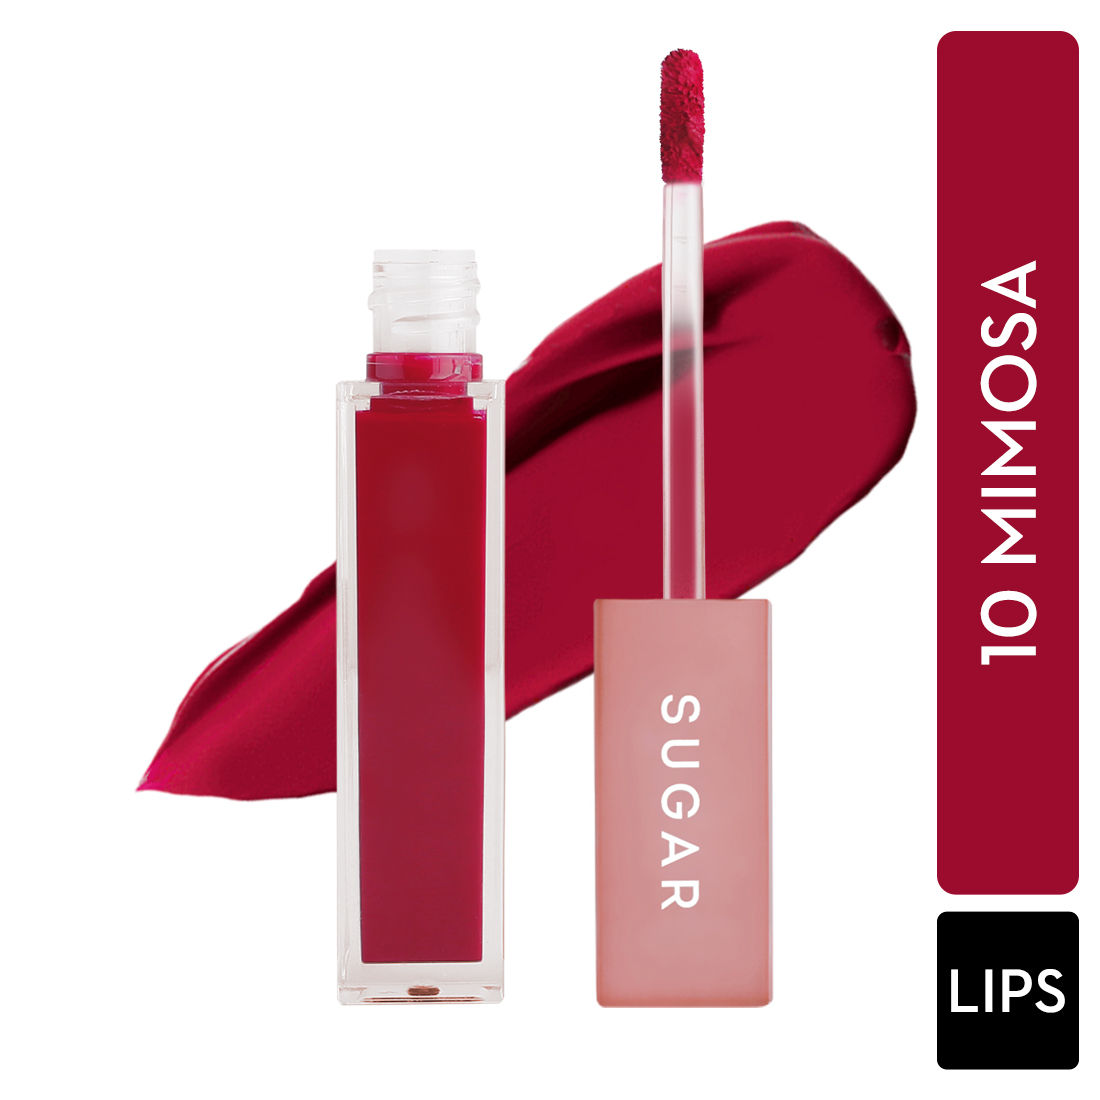 Buy SUGAR Cosmetics - Mettle - Liquid Lipstick - 10 Mimosa (Deep Pinkish Red with Blue Undertone) - 7 gms - Creamy, Lightweight Lipstick, Lasts Up to 14 hours - Purplle